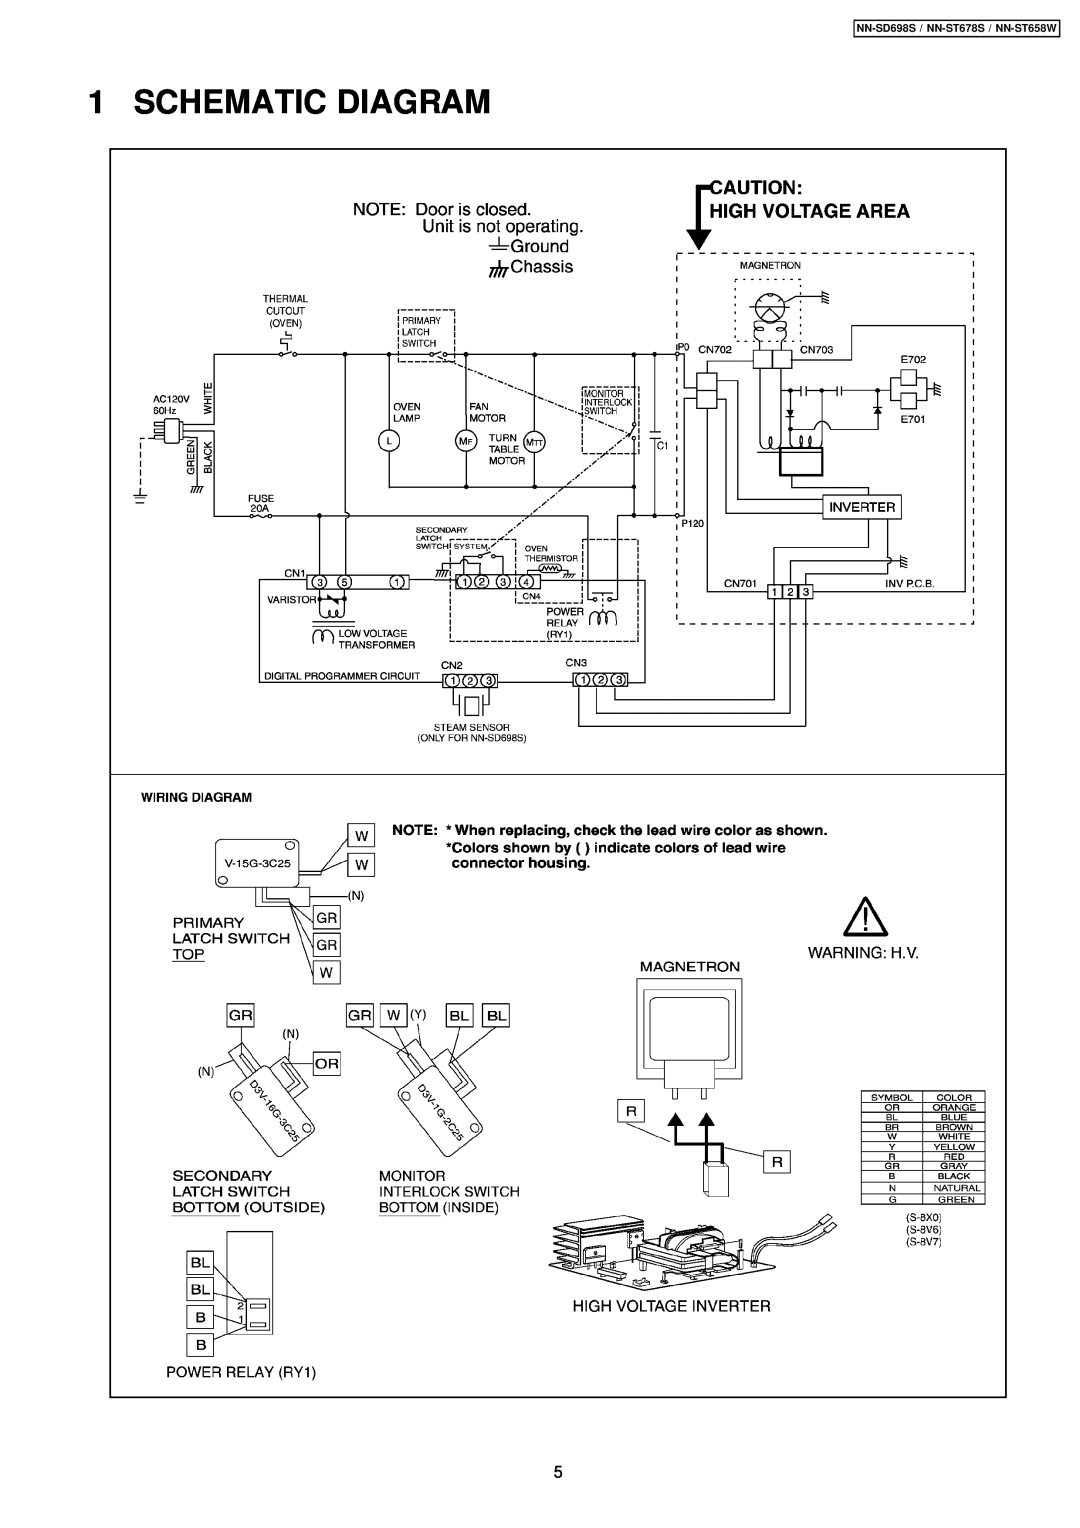 Panasonic manual Schematic Diagram, NN-SD698S / NN-ST678S / NN-ST658W 